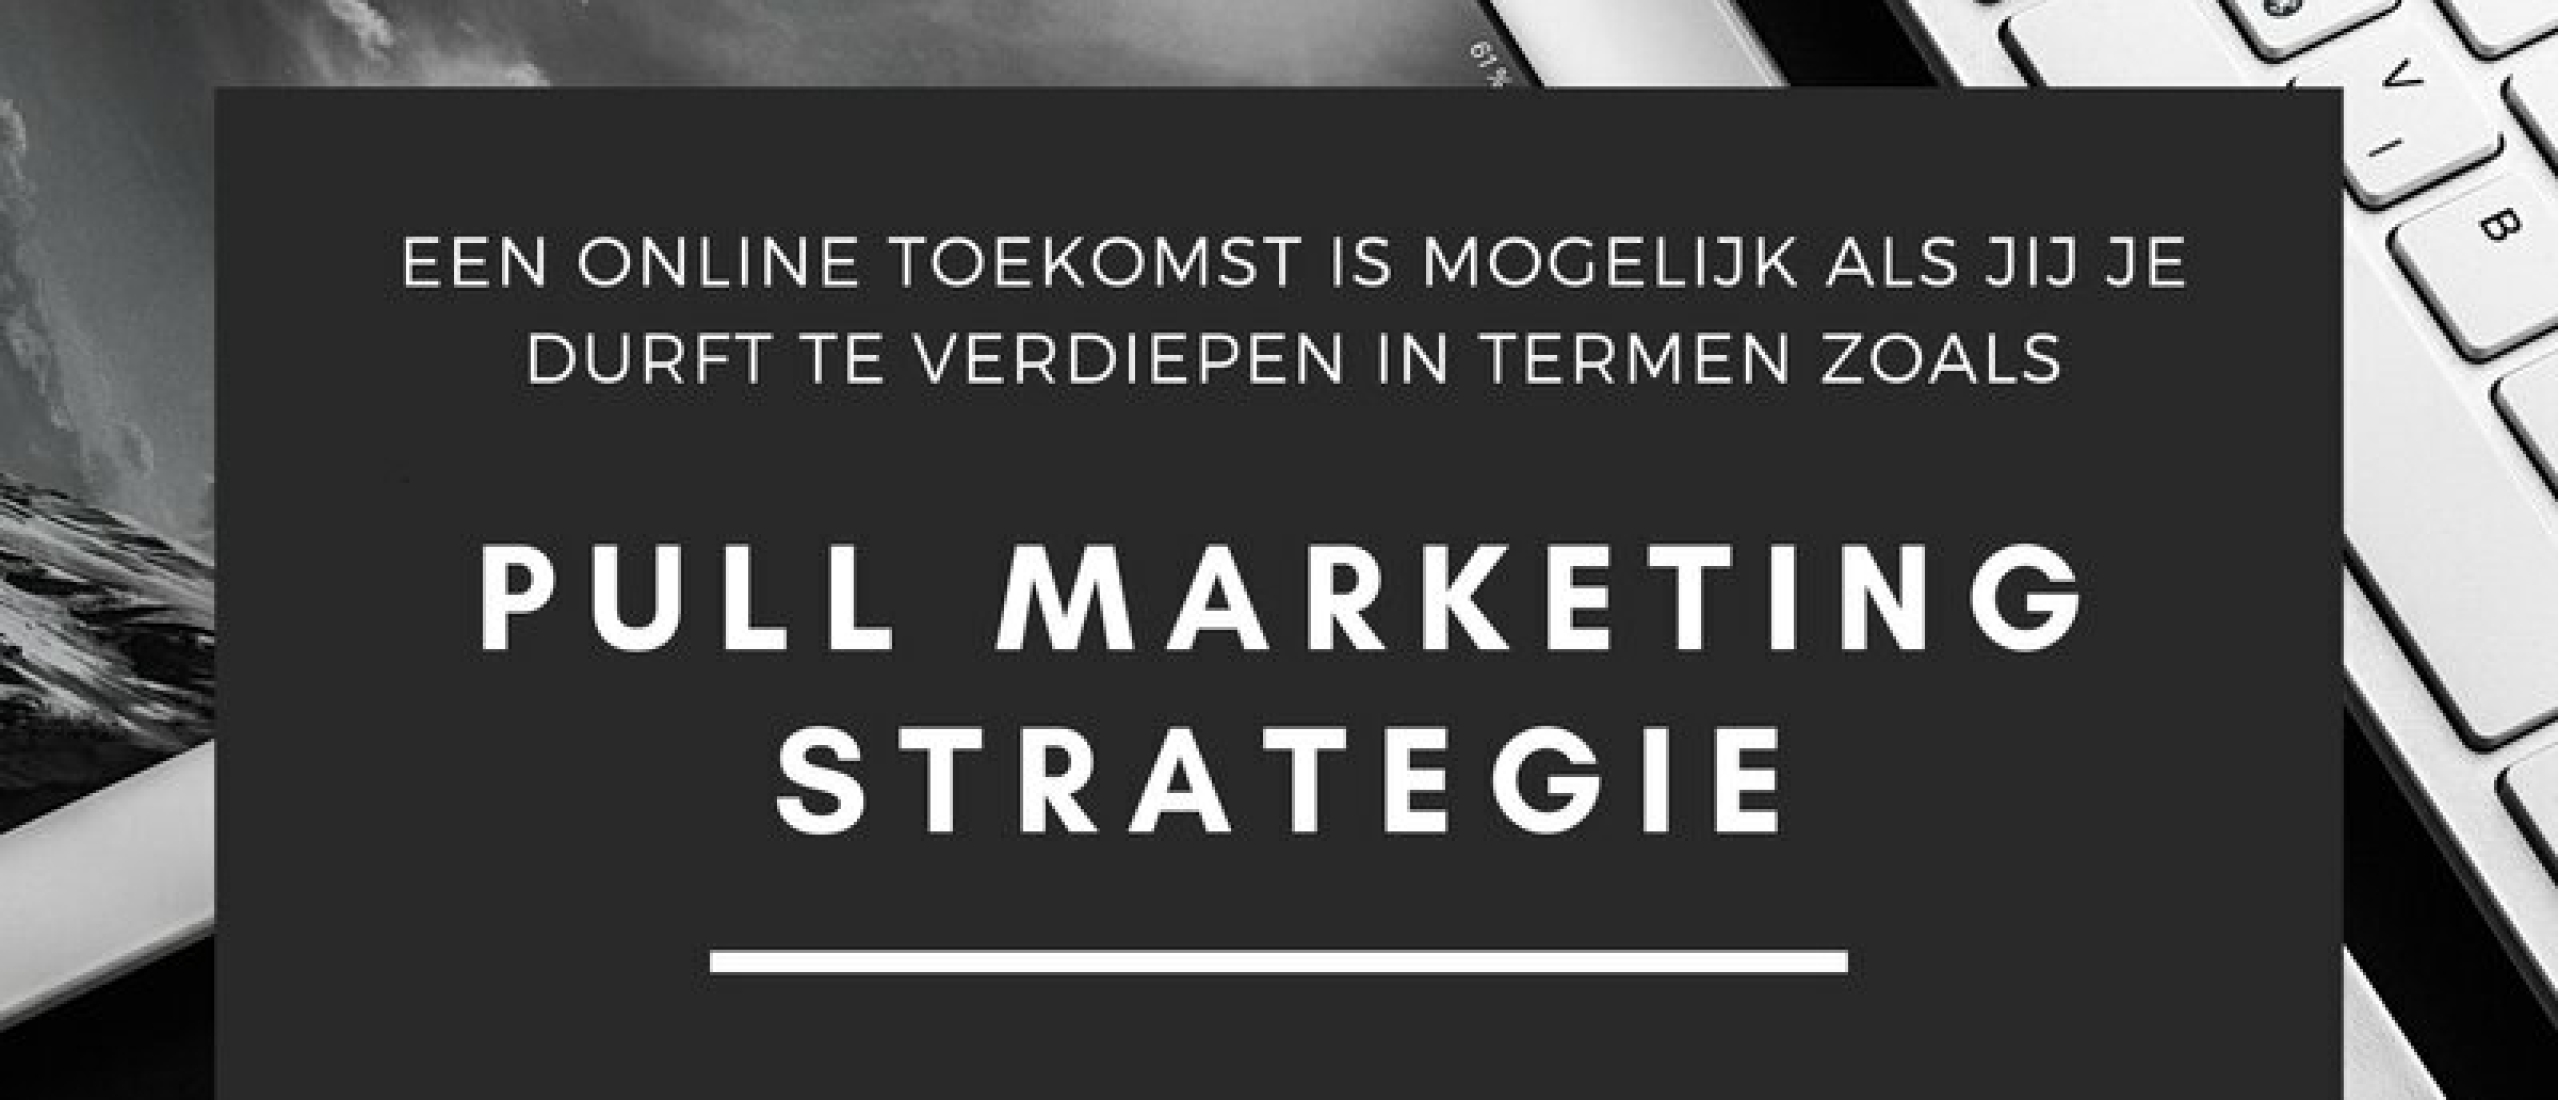 Pull Marketing Strategie